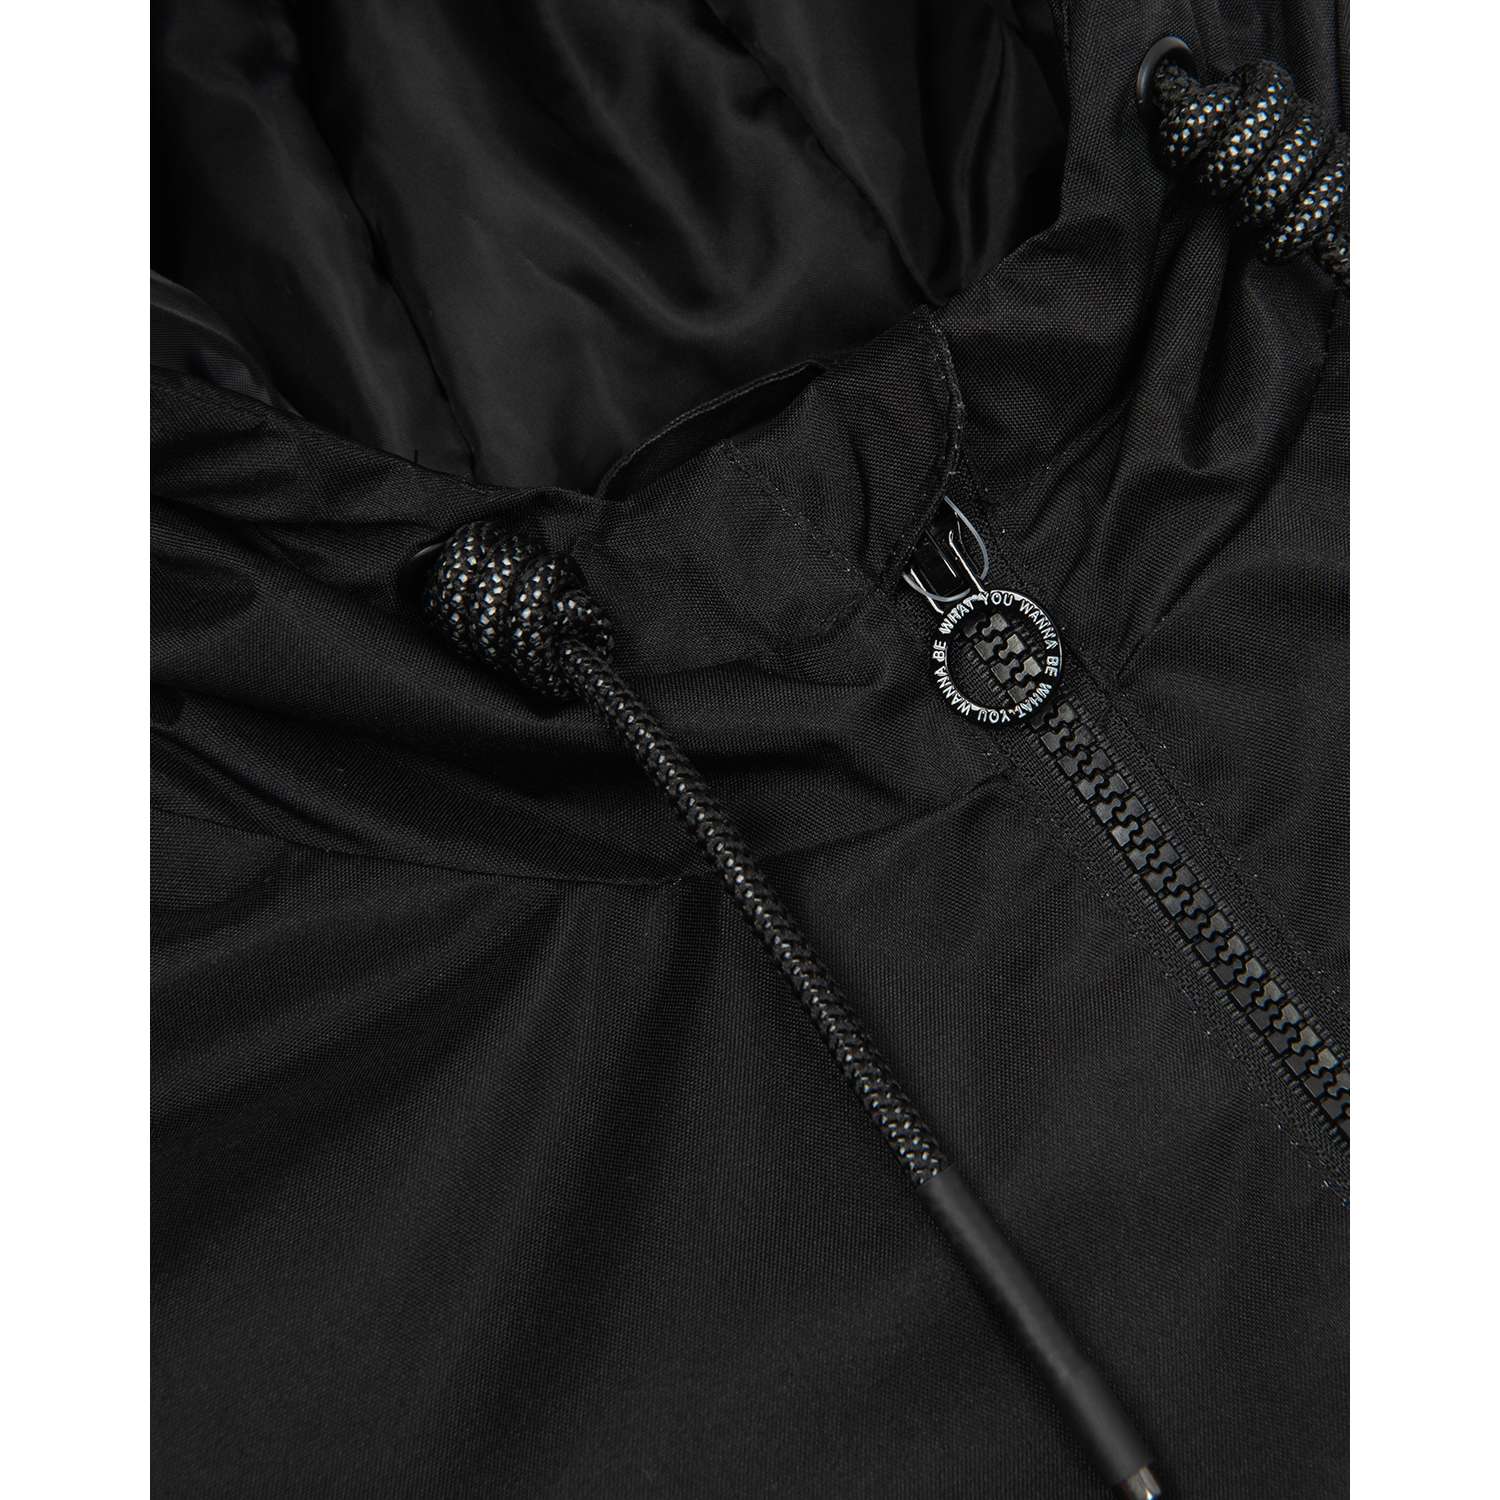 Куртка Futurino Cool SS23-R4FCtb-99 - фото 5